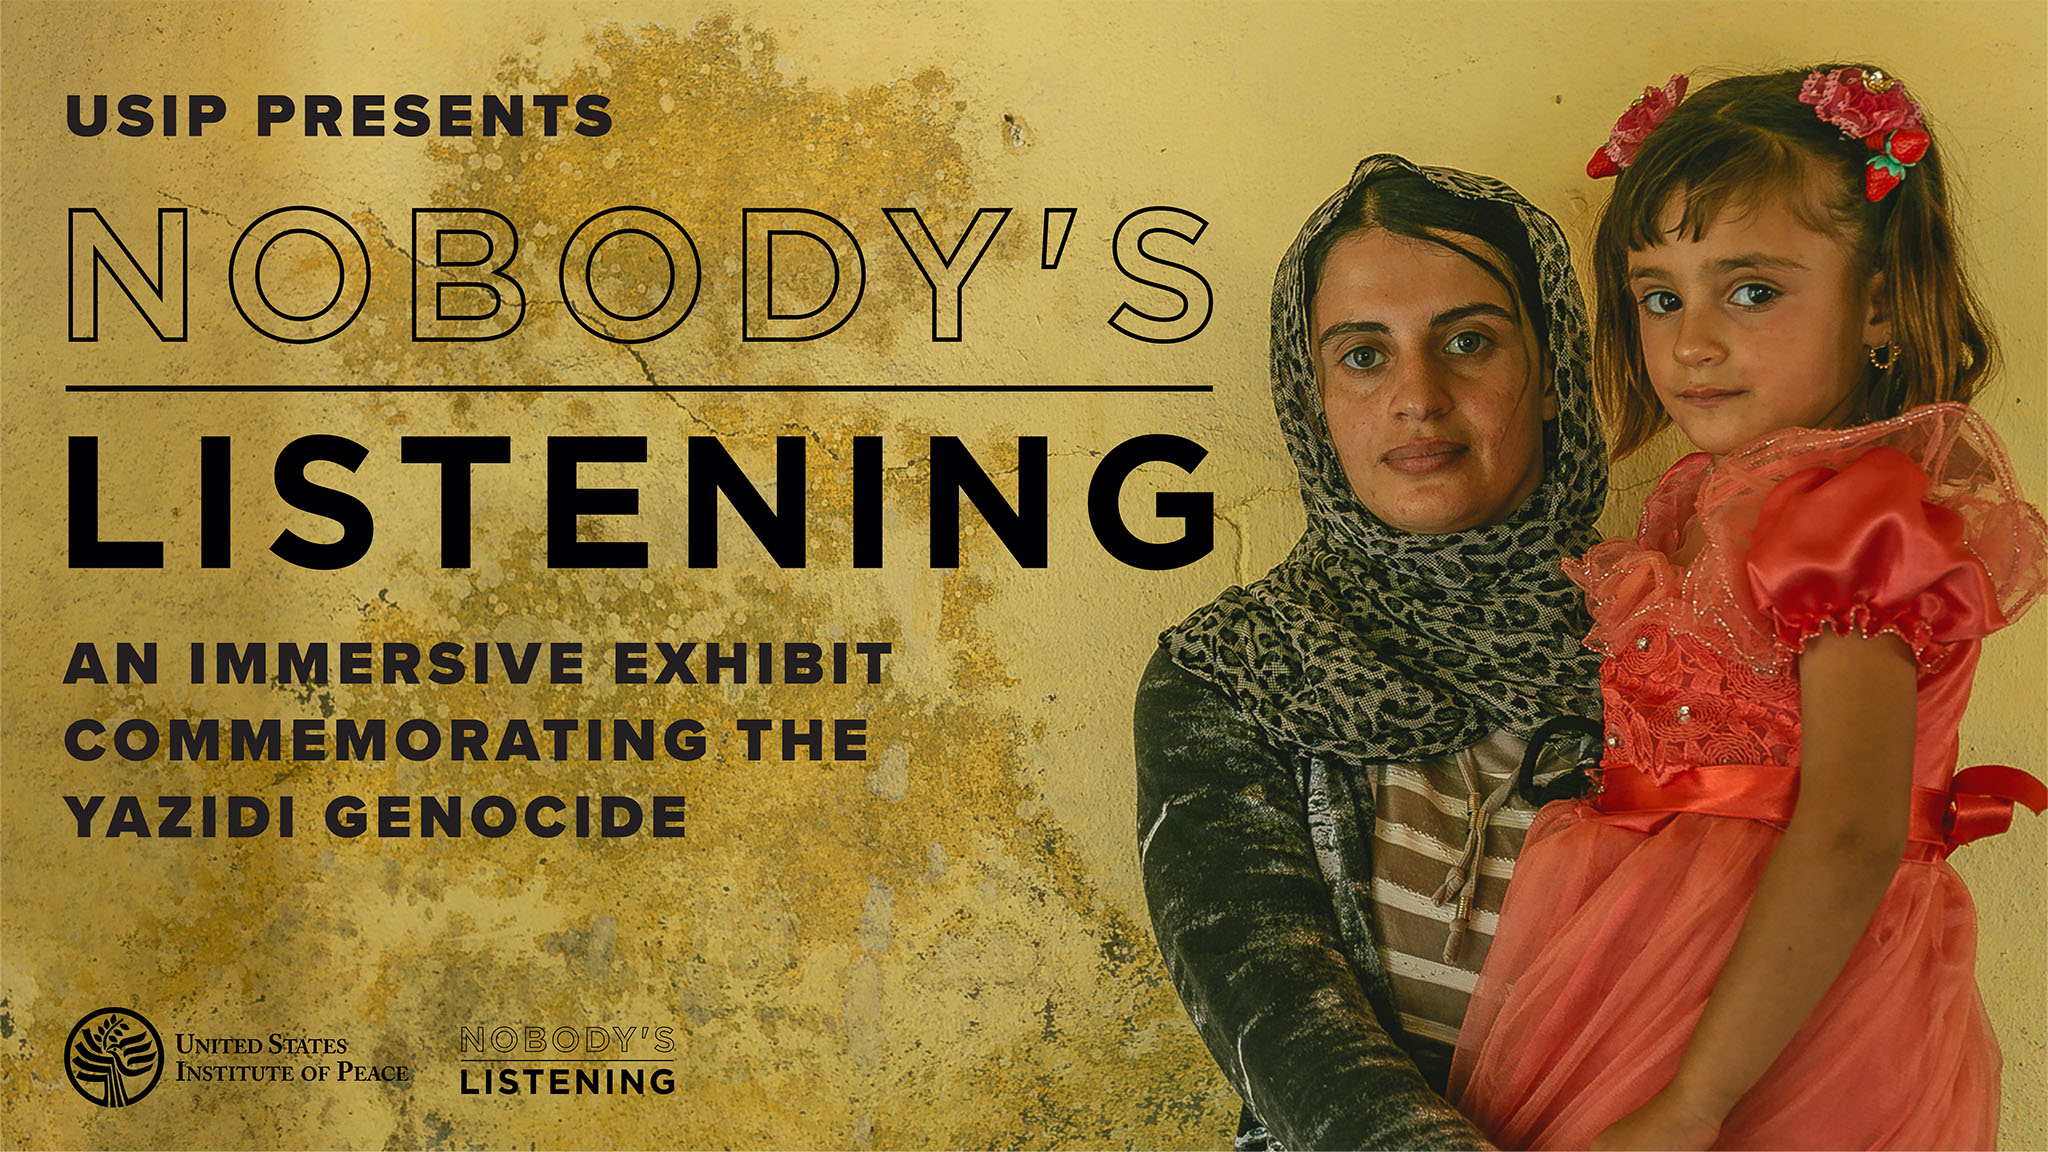 U.S. Institute of Peace presents “Nobody's Listening,” an immersive exhibit commemorating the Yazidi genocide 